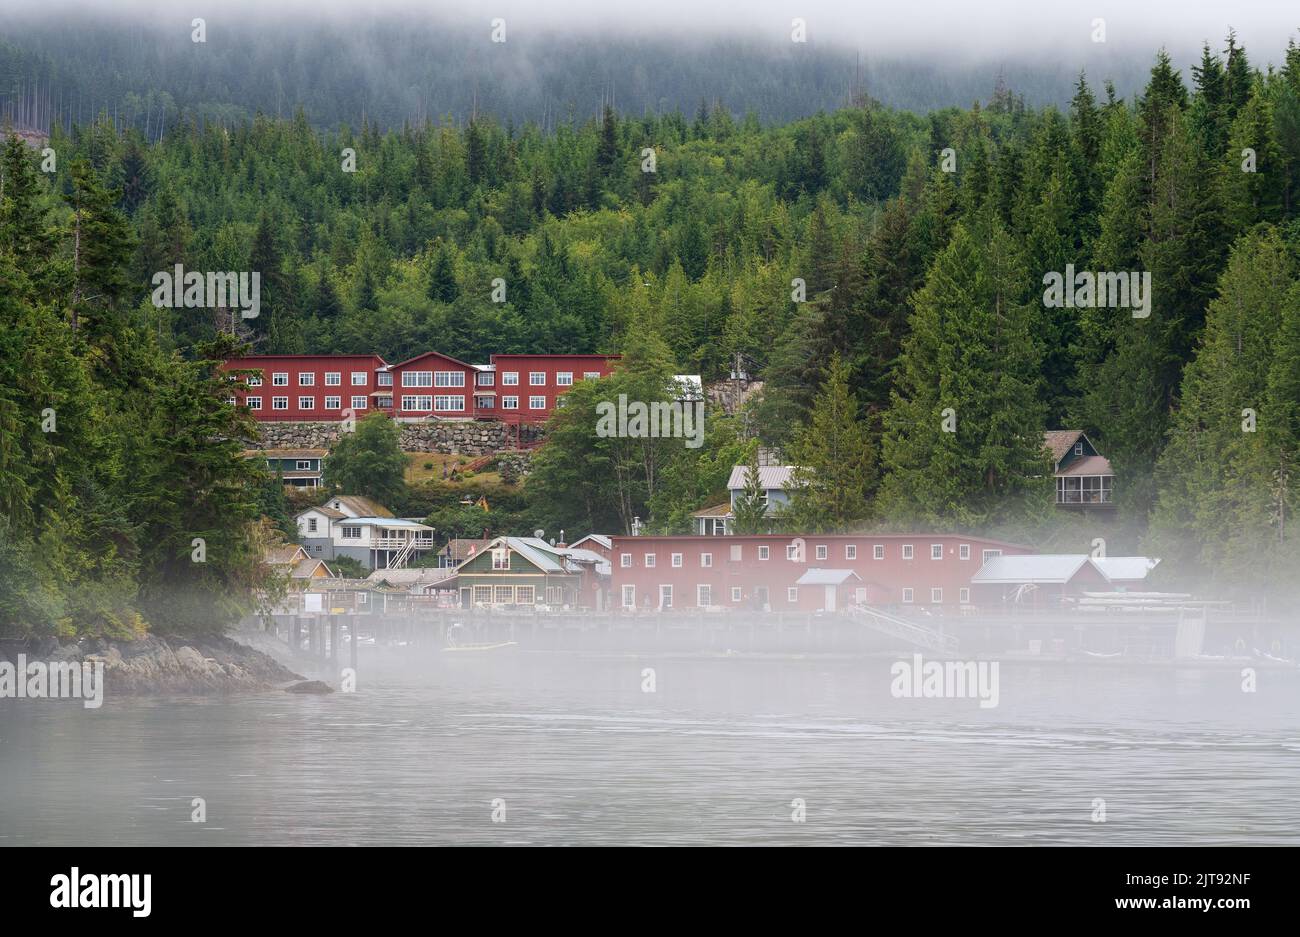 Telegraph cove in fog and mist, Vancouver Island, British Columbia, Canada. Stock Photo